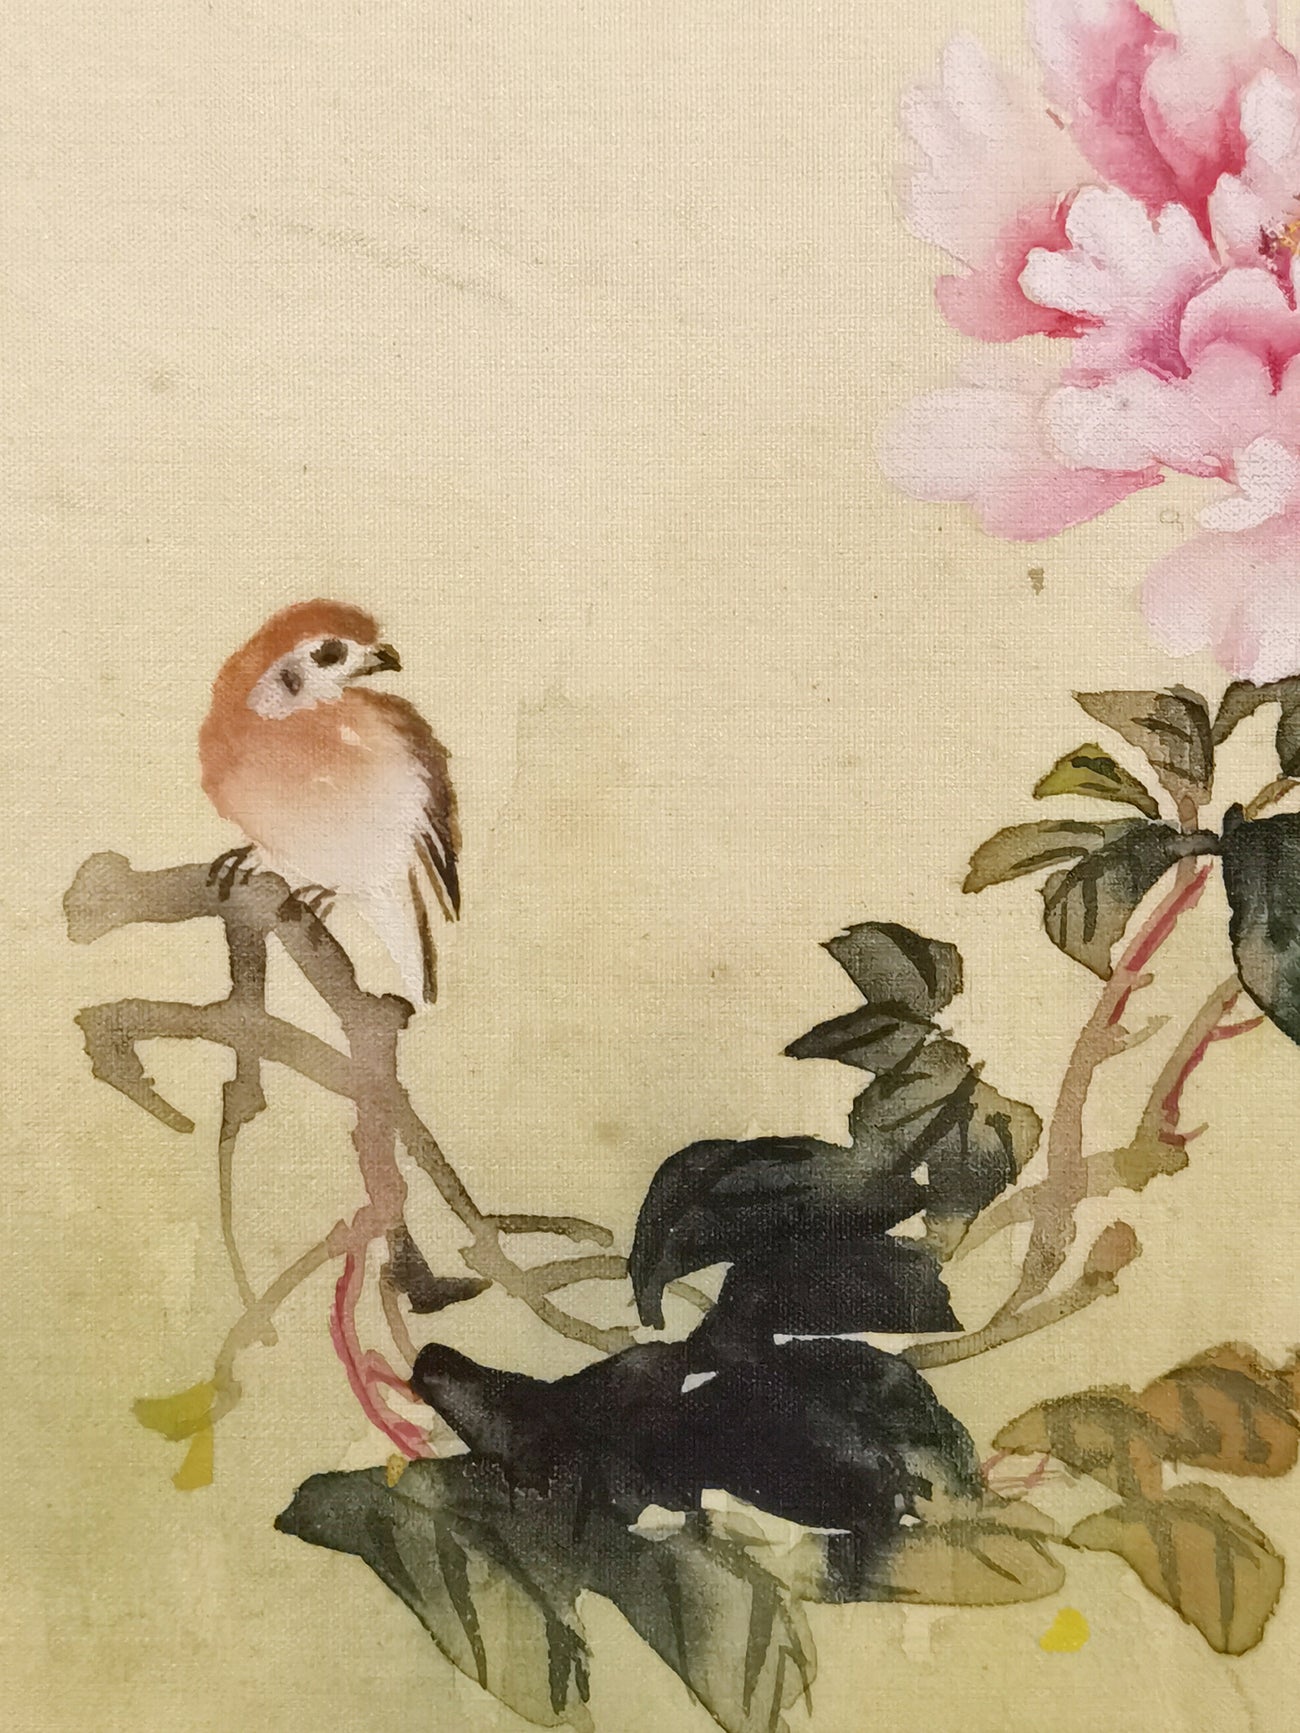 Shrike Bird Perception Handmade Art Printing Peony Flowers Watercolor with Wood Frame